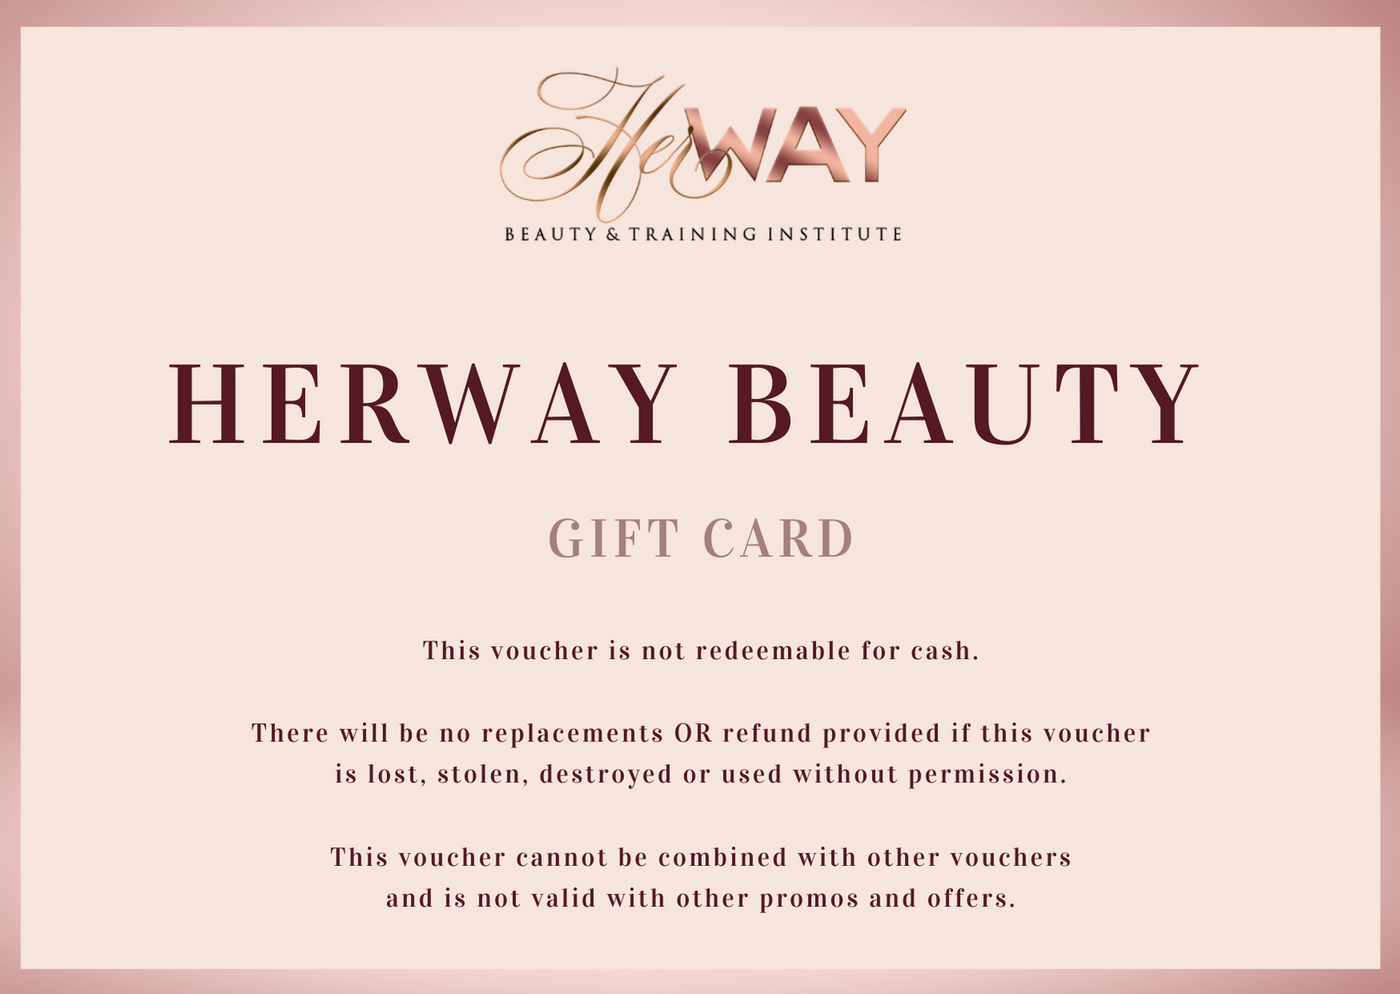 HERWAY GIFT CARD